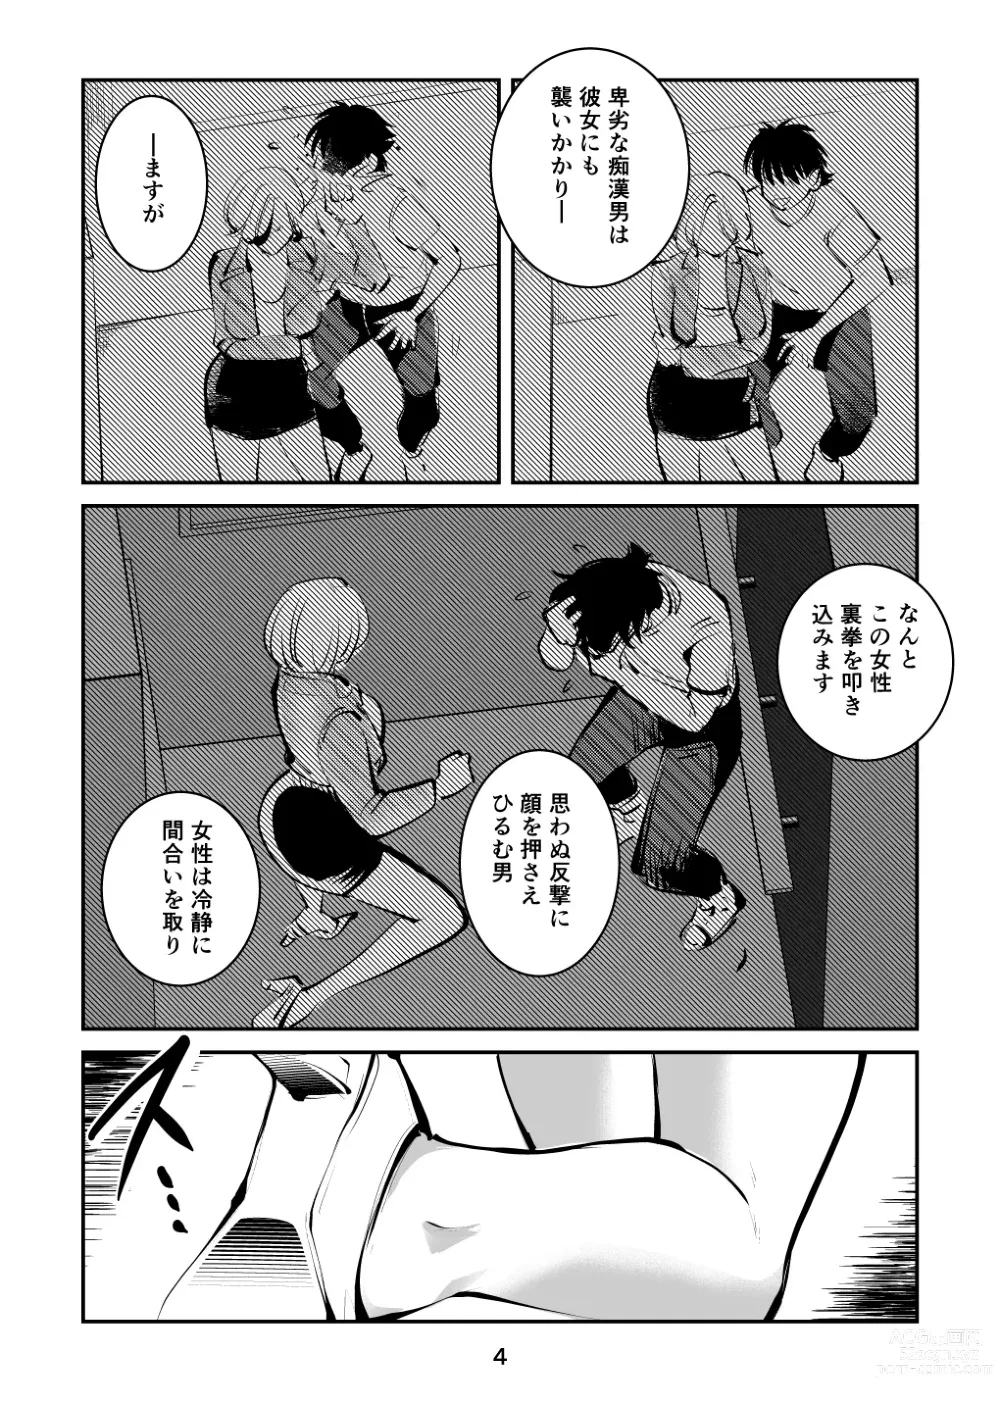 Page 4 of doujinshi Kinkeri onna keiji ryōko